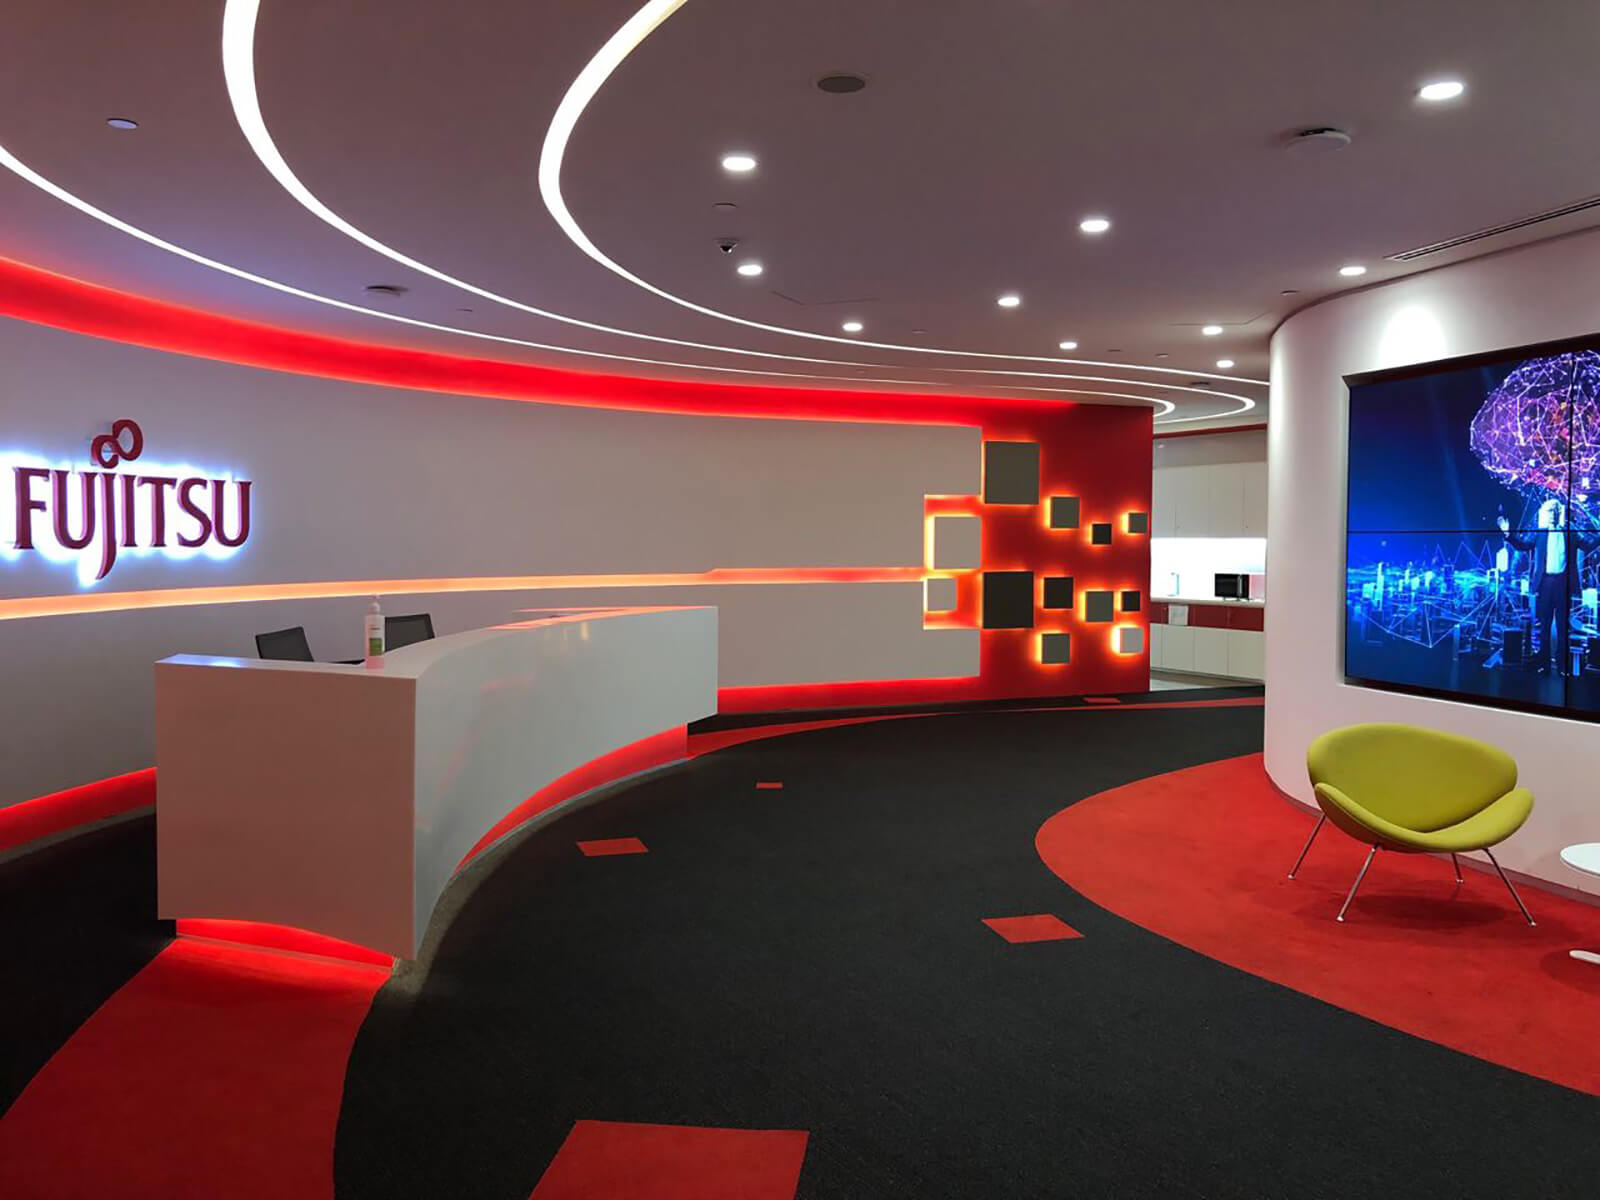 Fujitsu Asia lobby interior